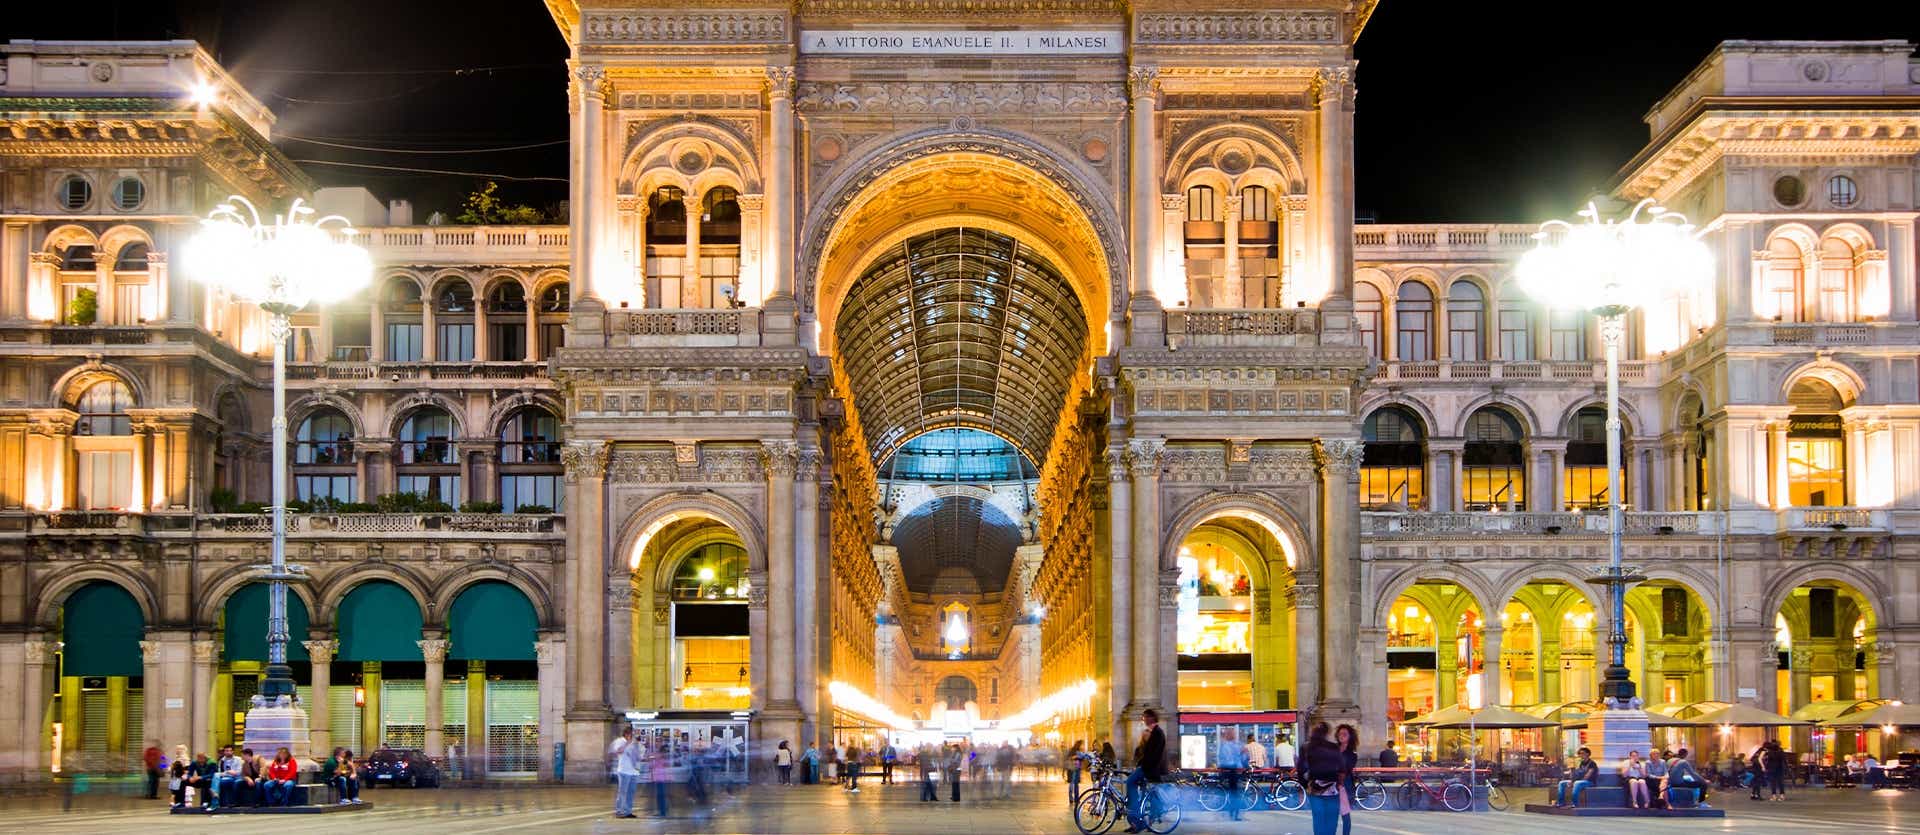 Galleria Vittorio Emanuele <span class="iconos separador"></span> Milan